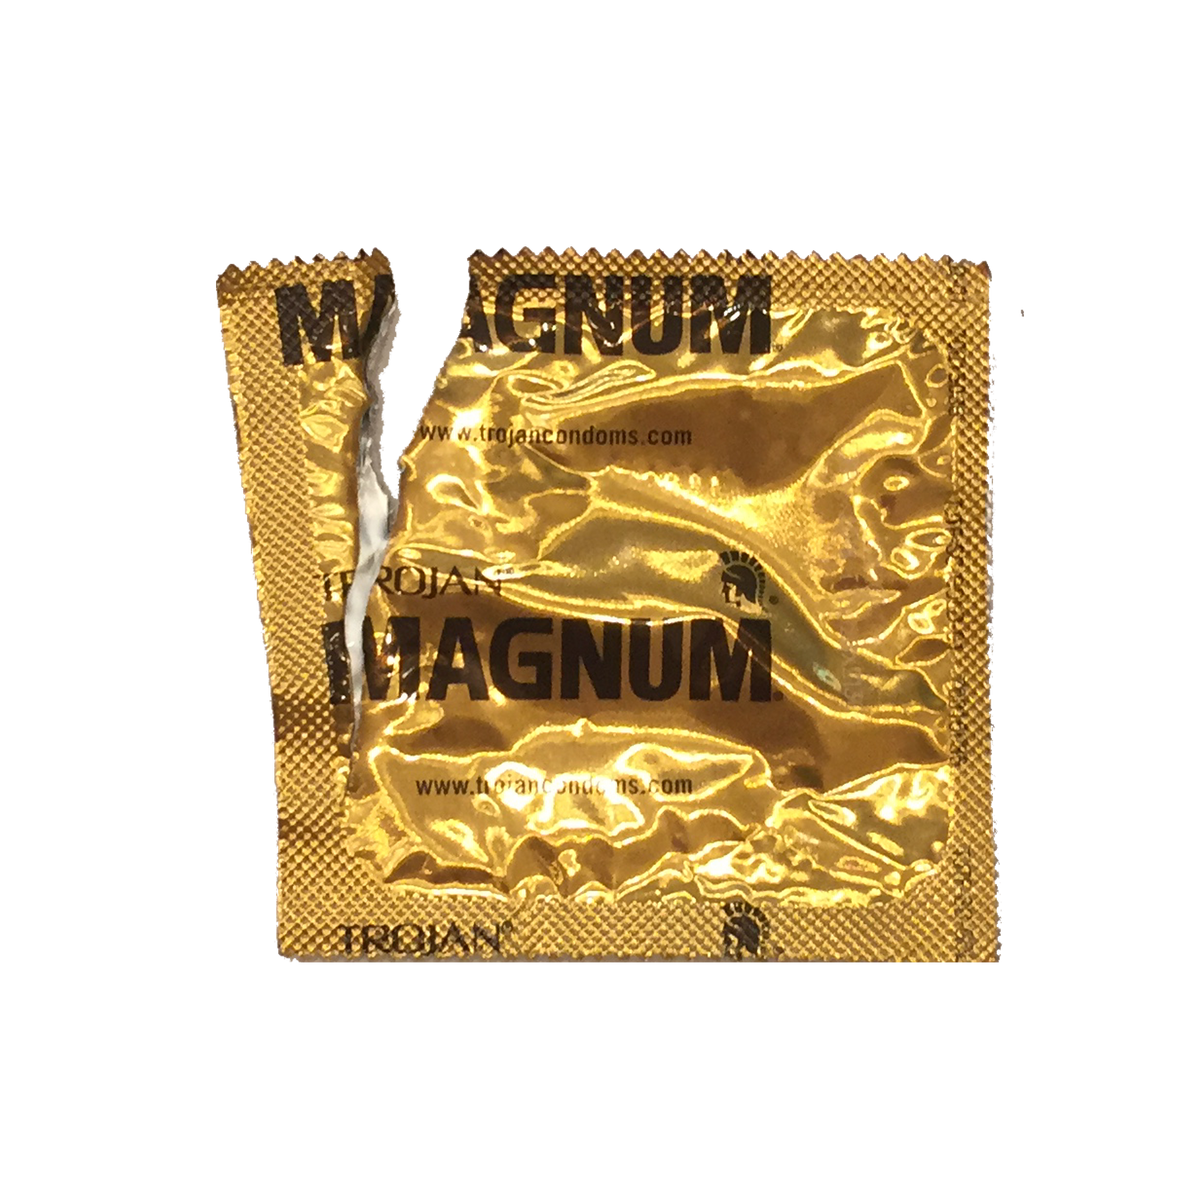 Used Magnum Condom Wrapper Pizzaslime